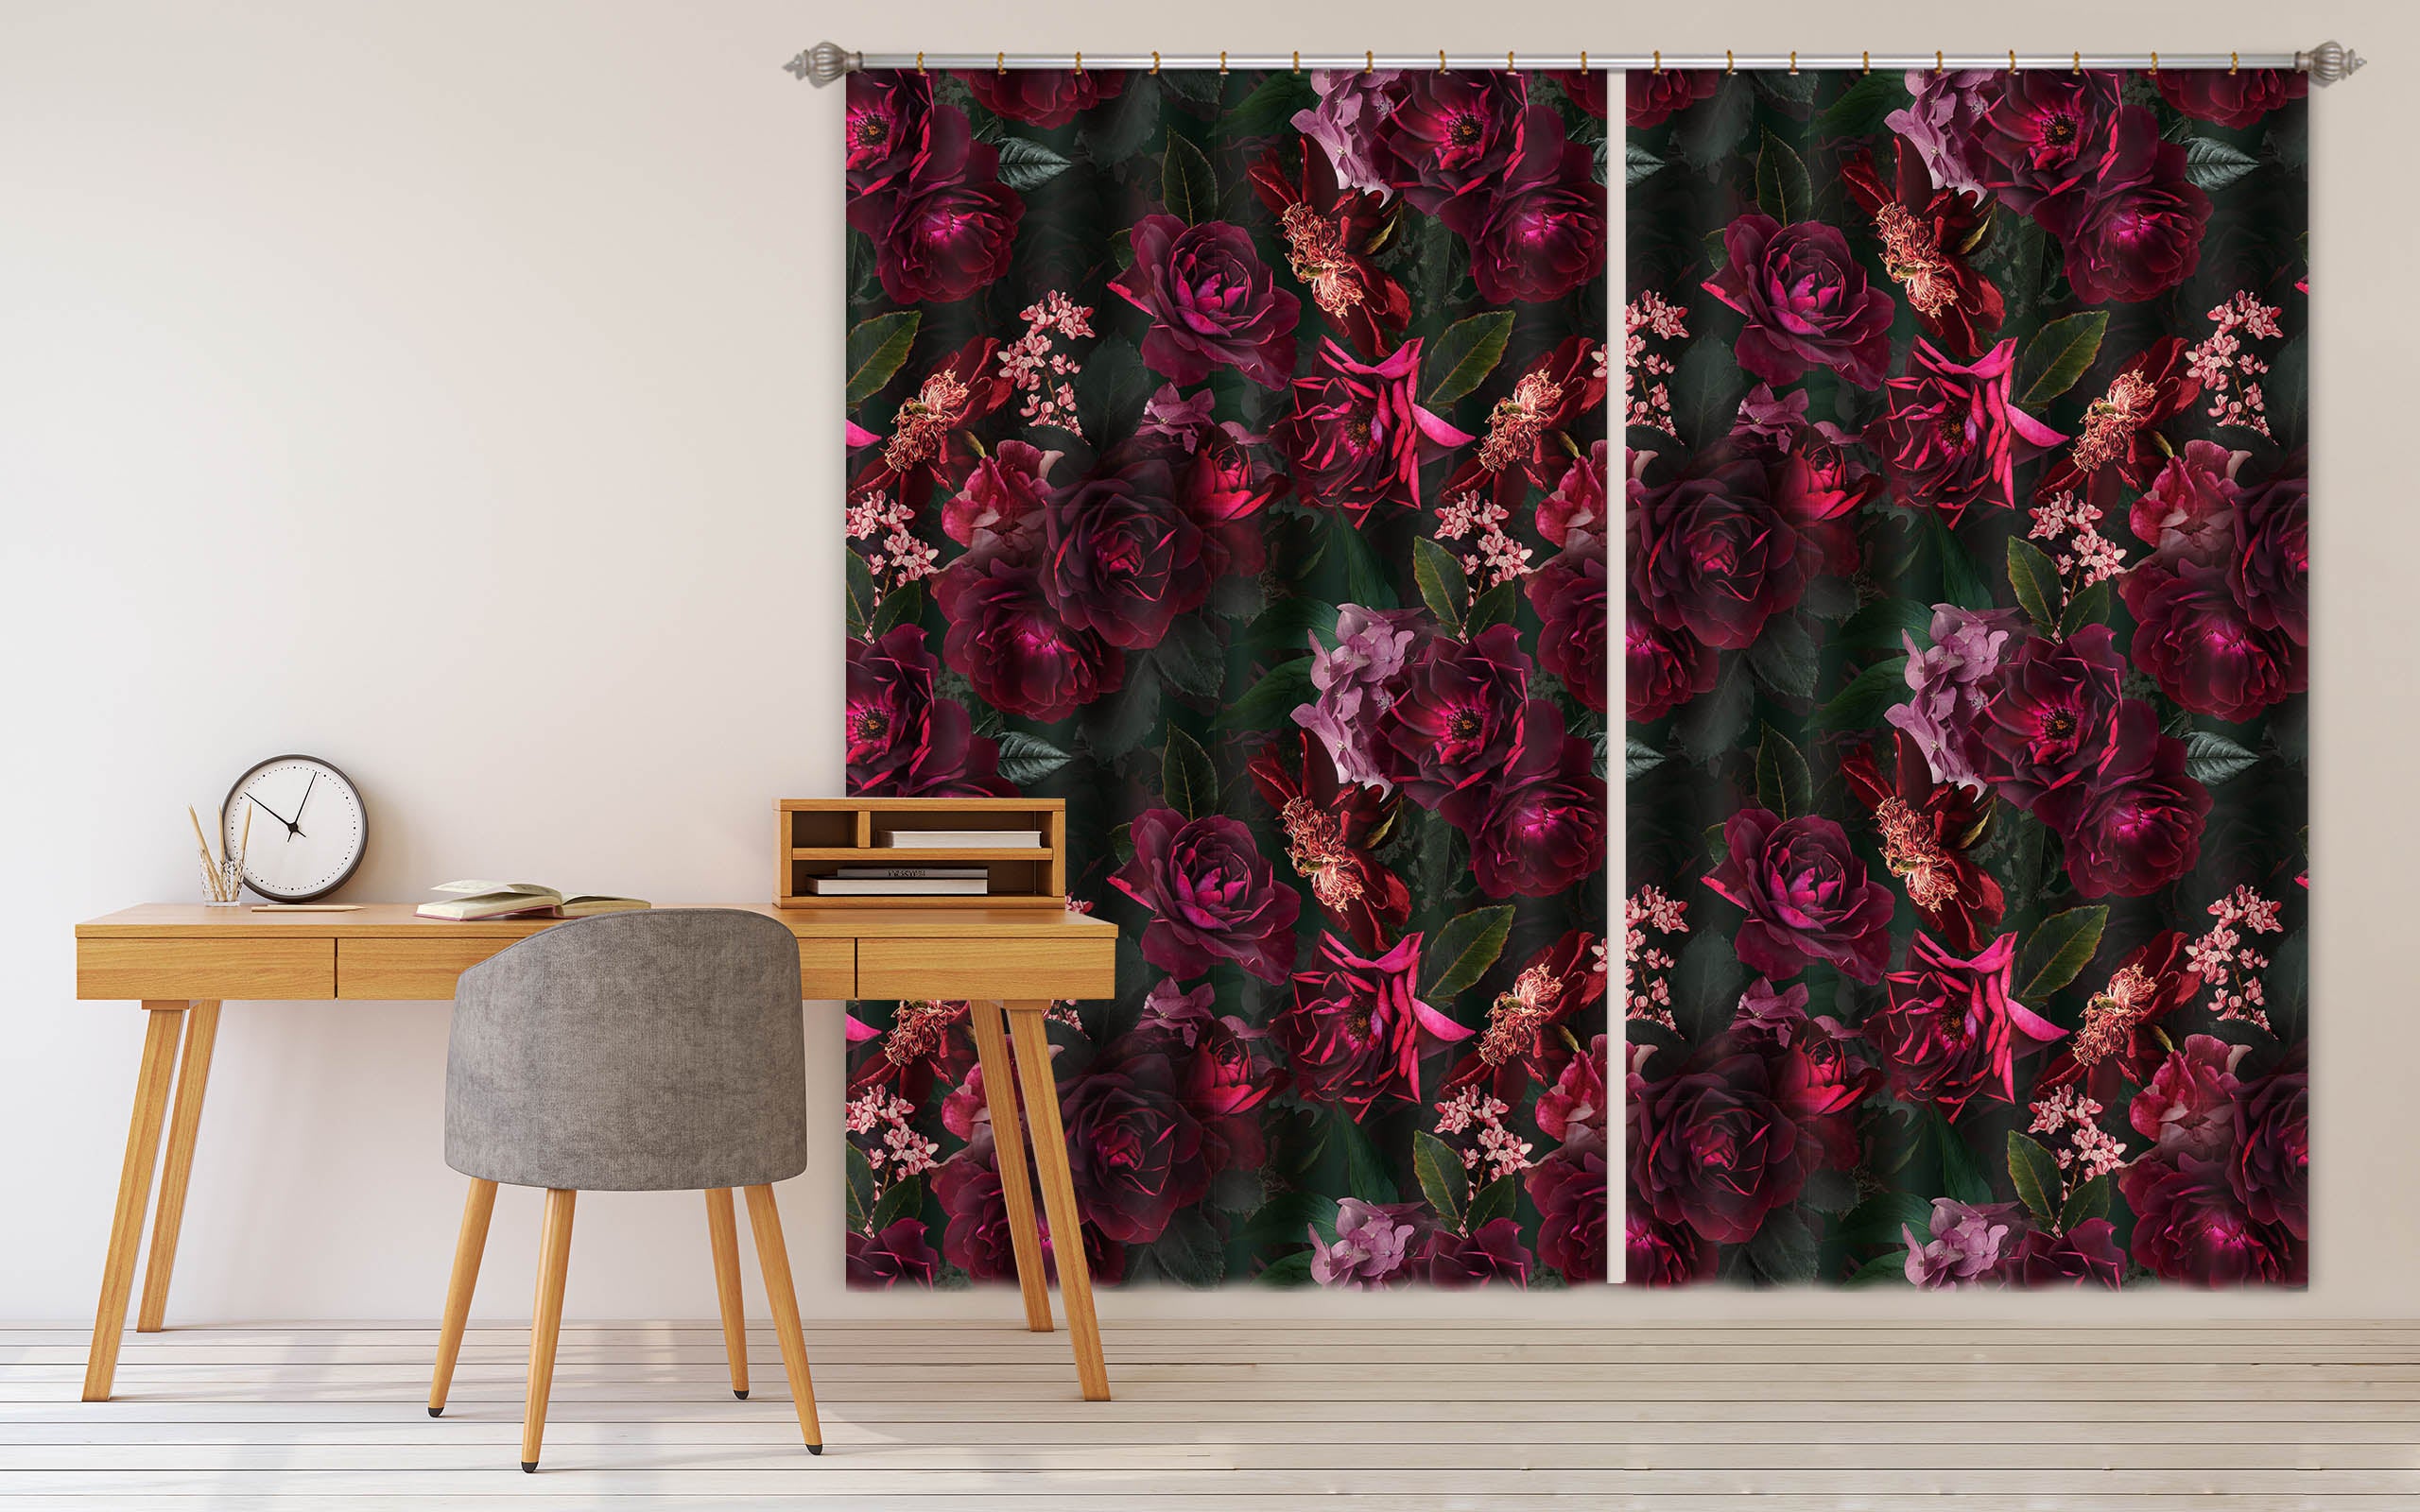 3D Painted Flowers 151 Uta Naumann Curtain Curtains Drapes